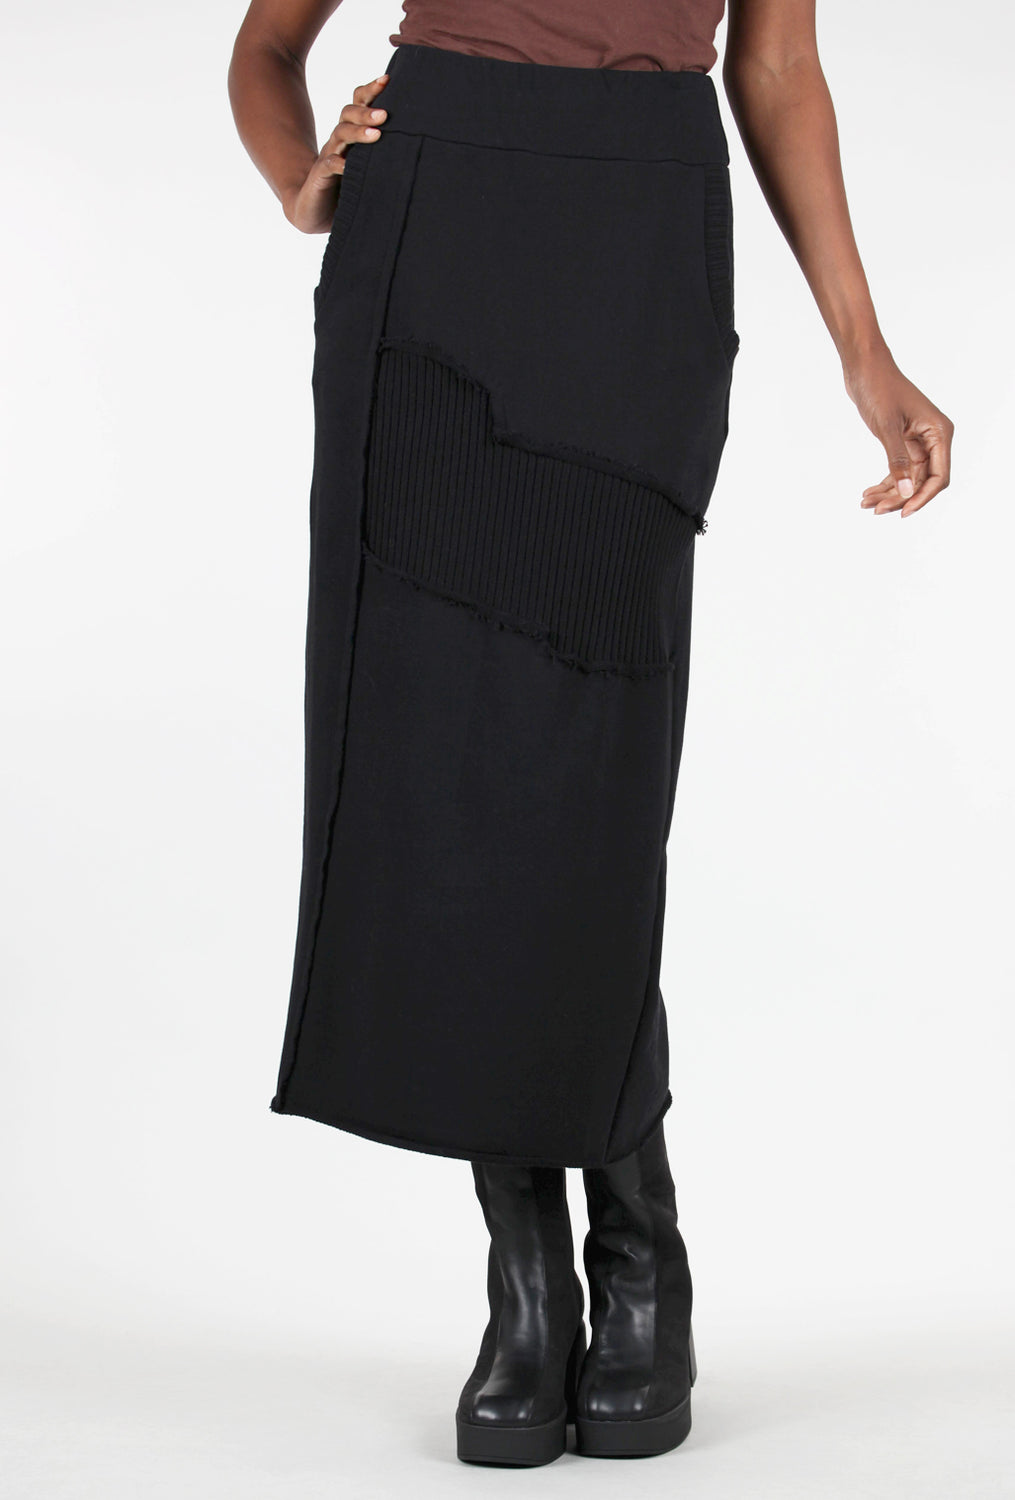 Studio B3 Lovery Patch Skirt, Black 